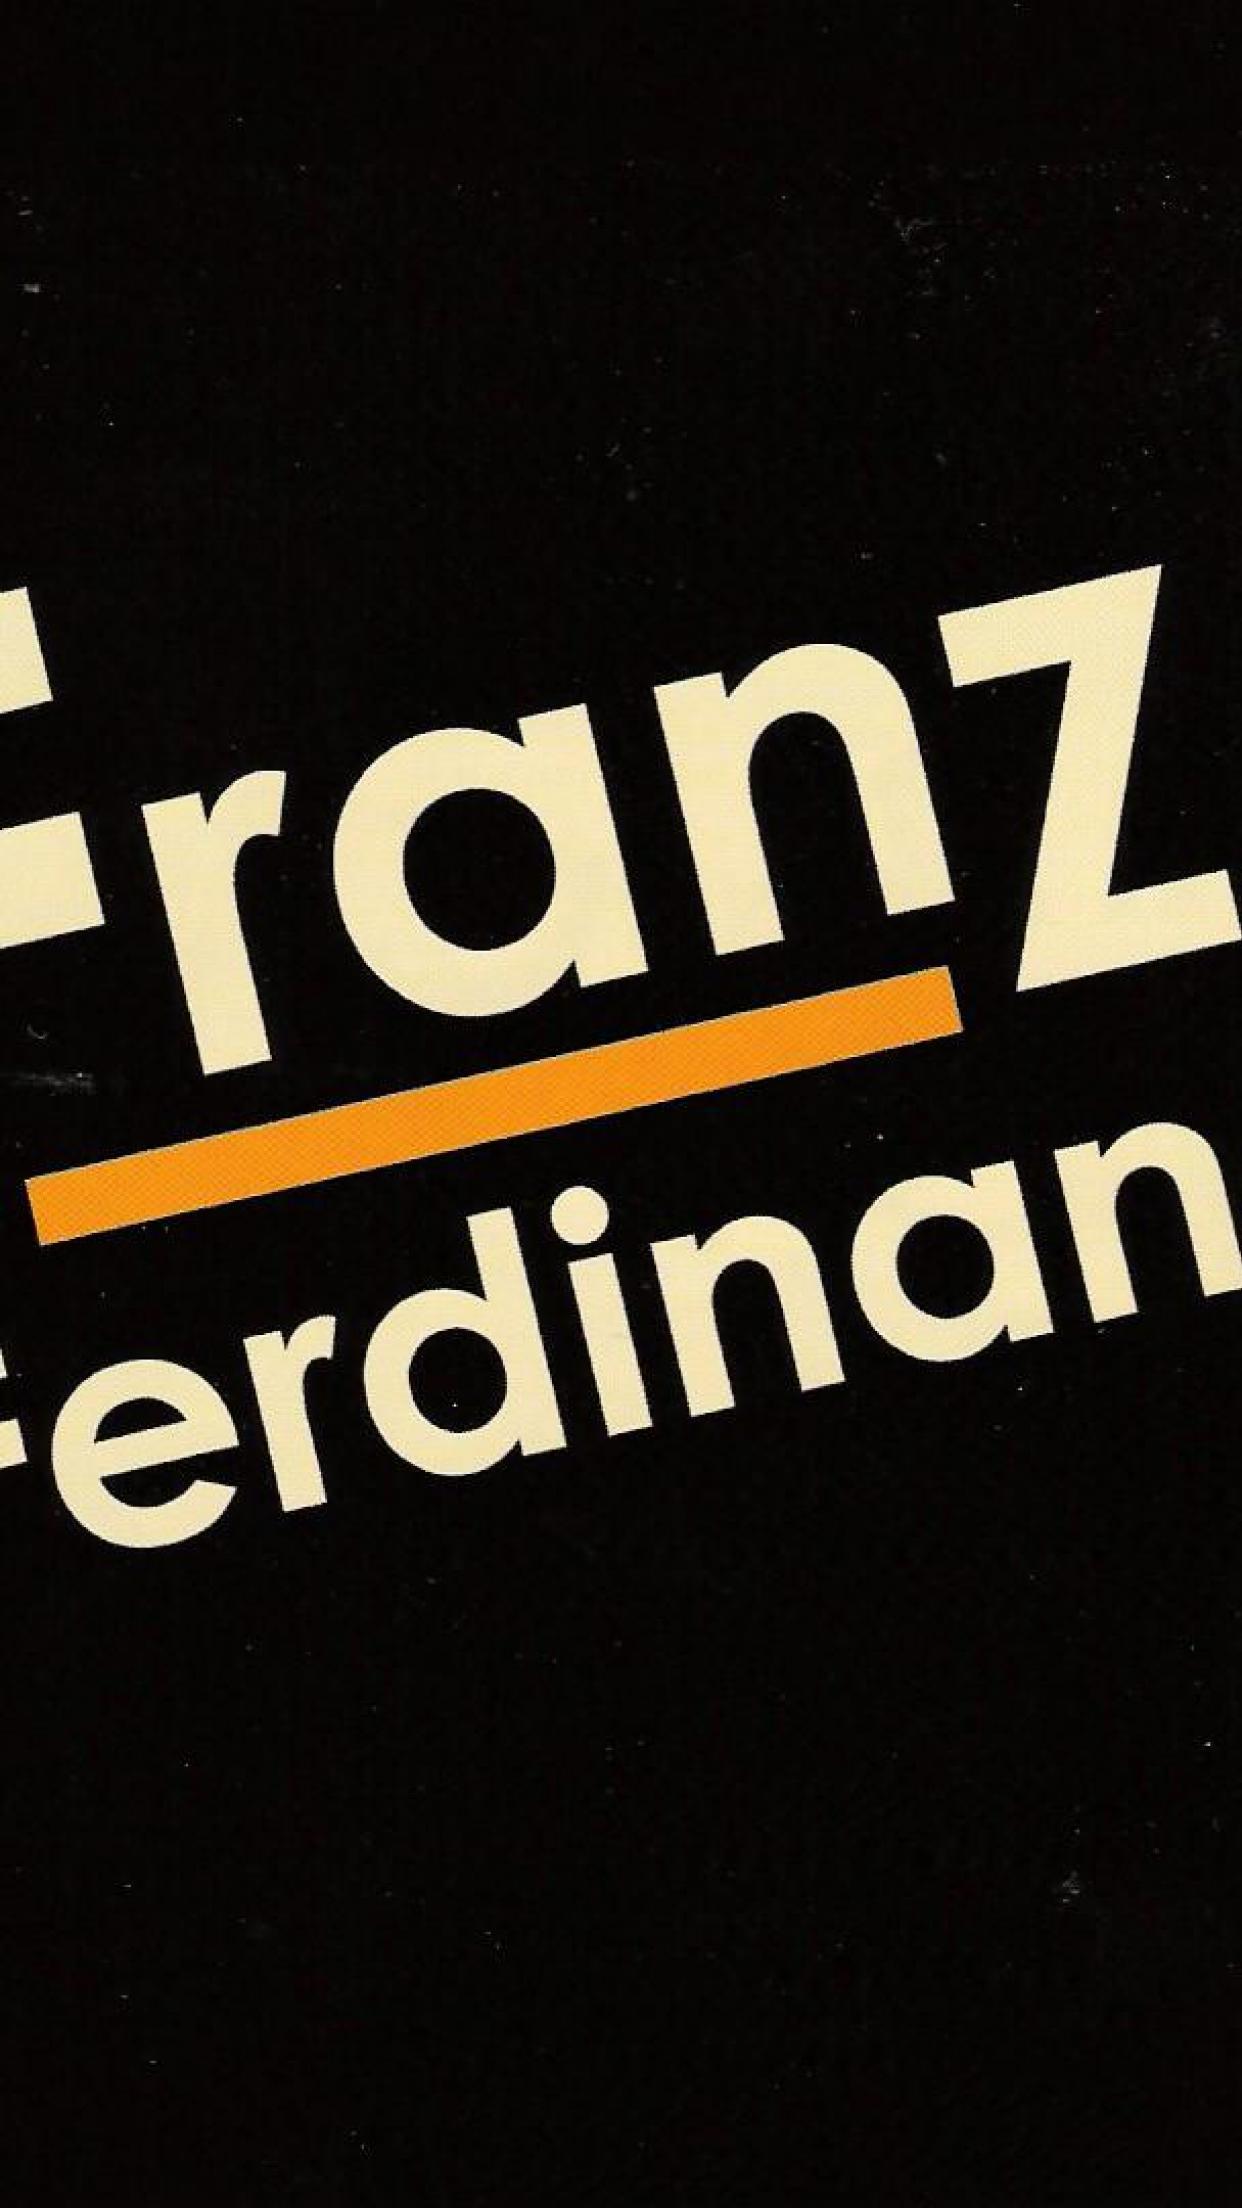 Franz ferdinand HD Wallpaper, Desktop Background, Mobile